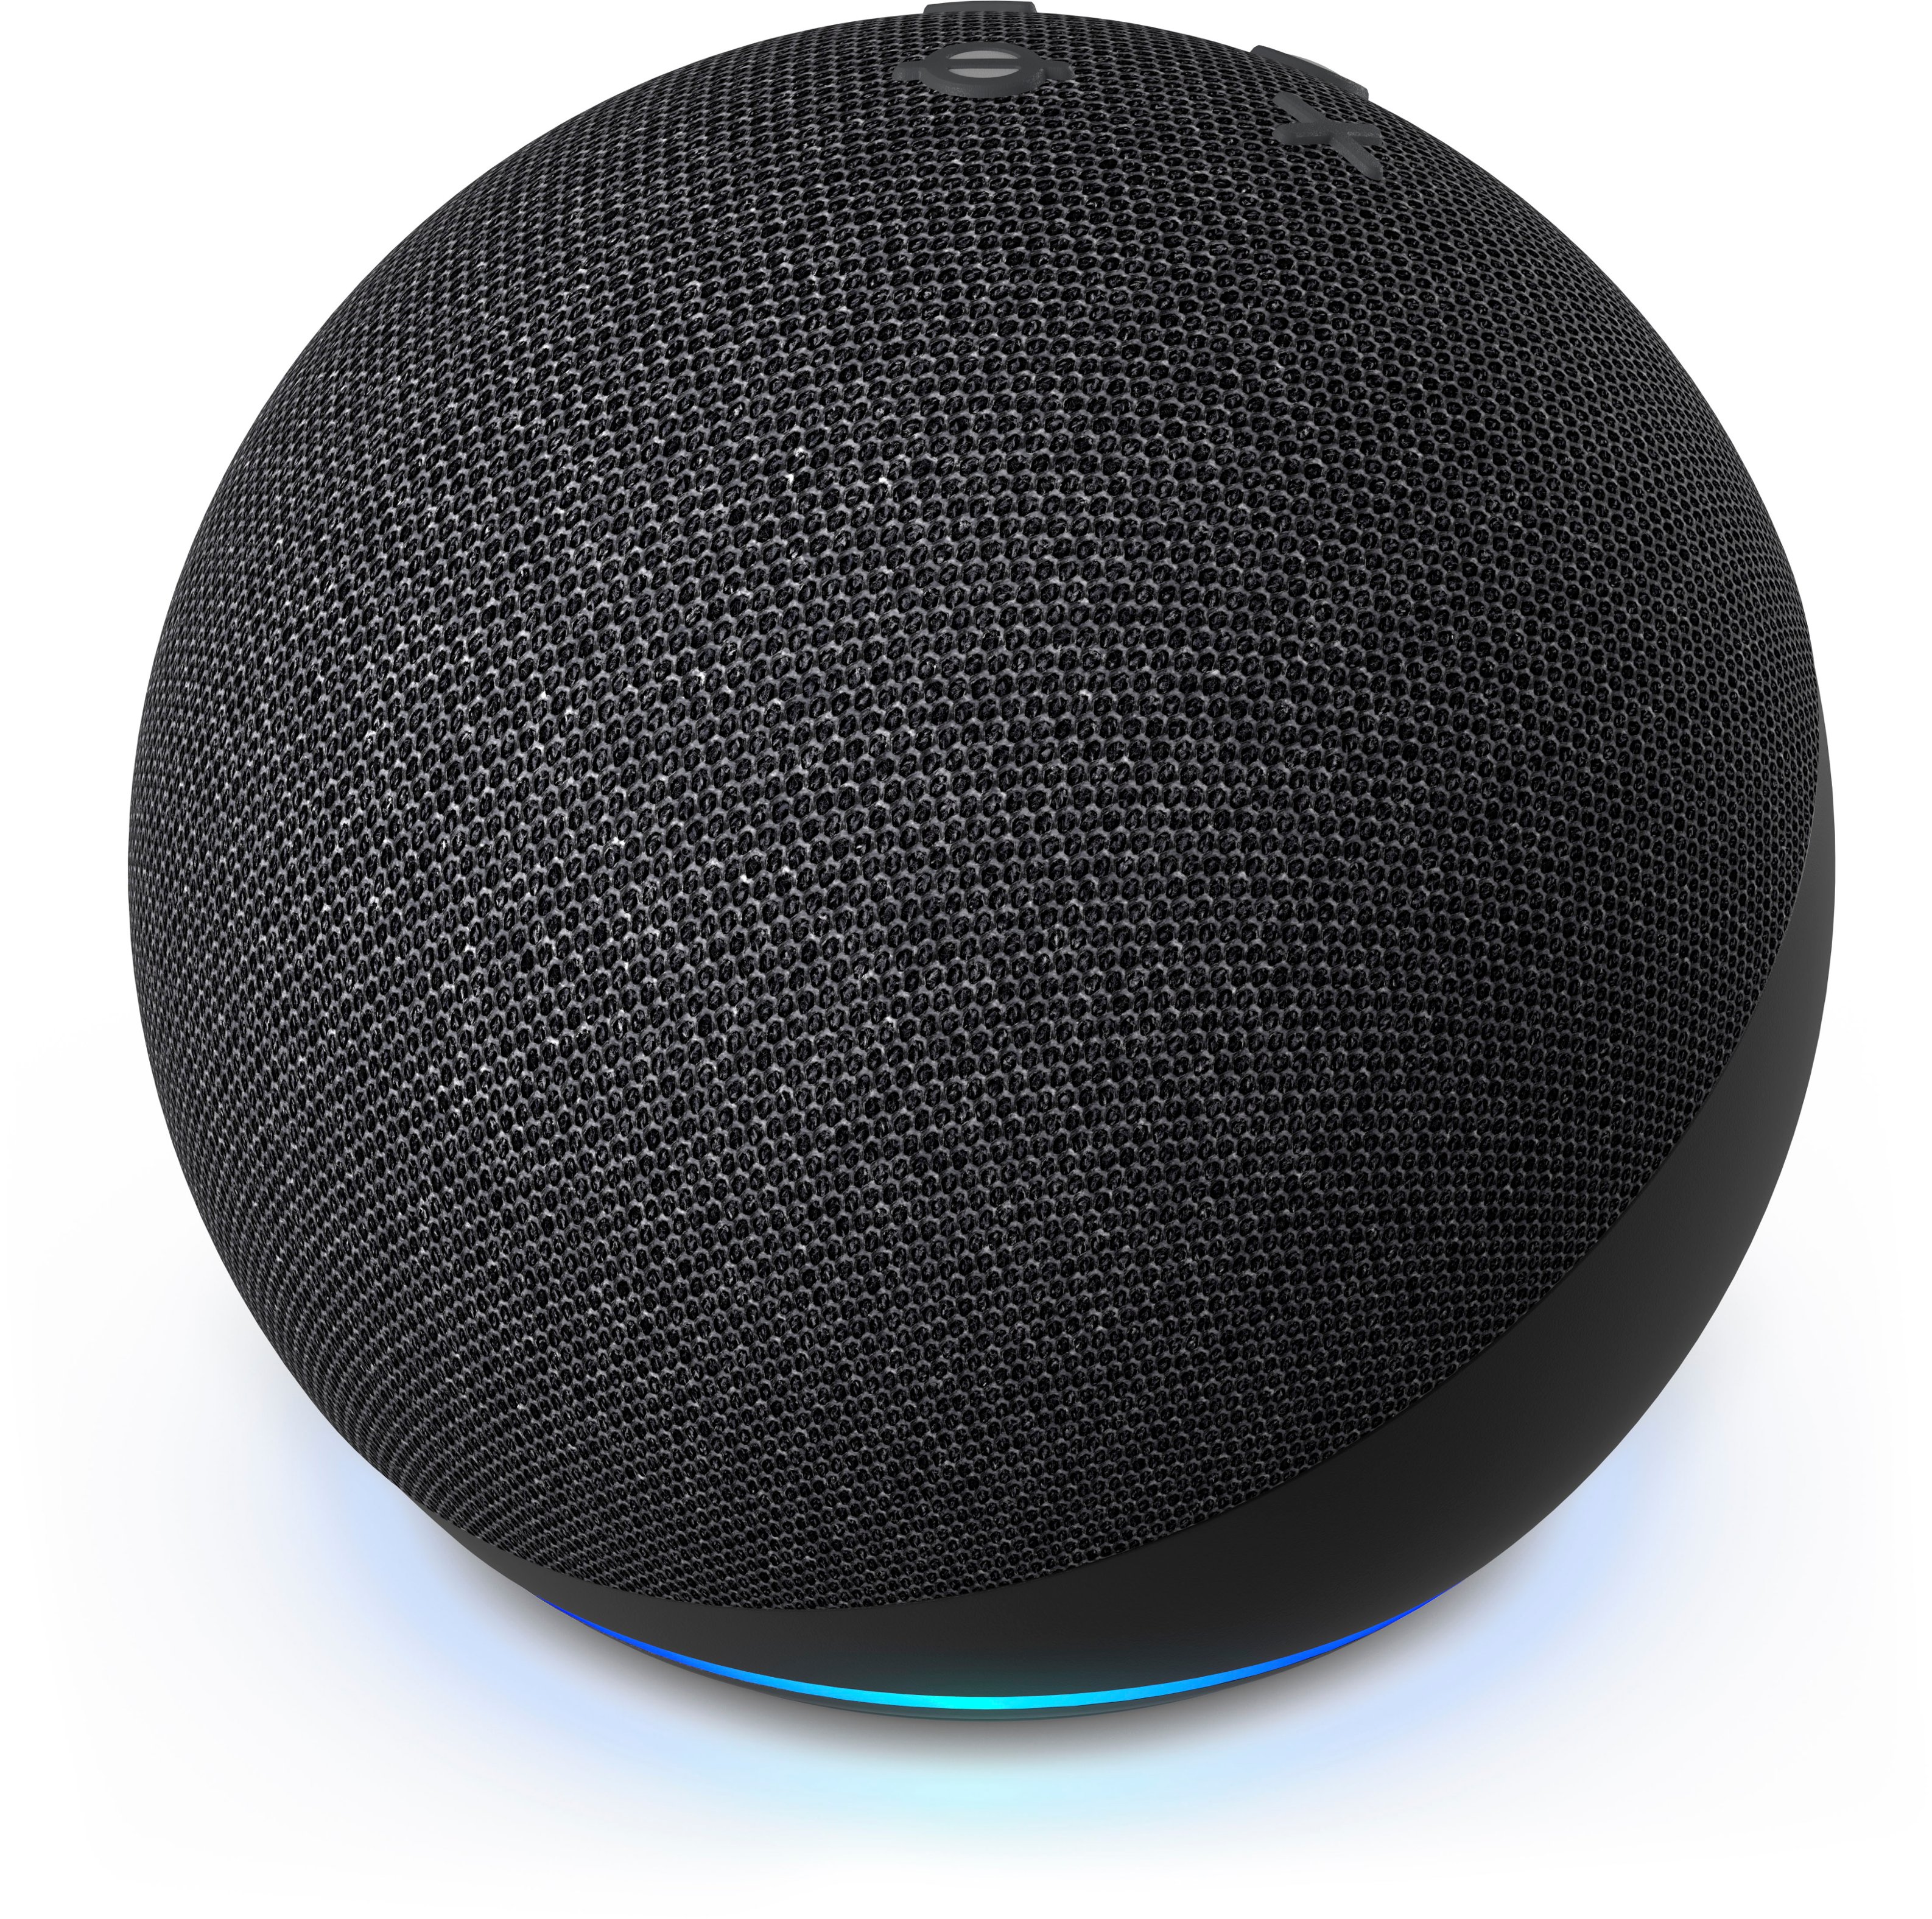 Buy  Echo Dot 5th Gen Smart Speaker With Alexa - Blue, Smart  speakers